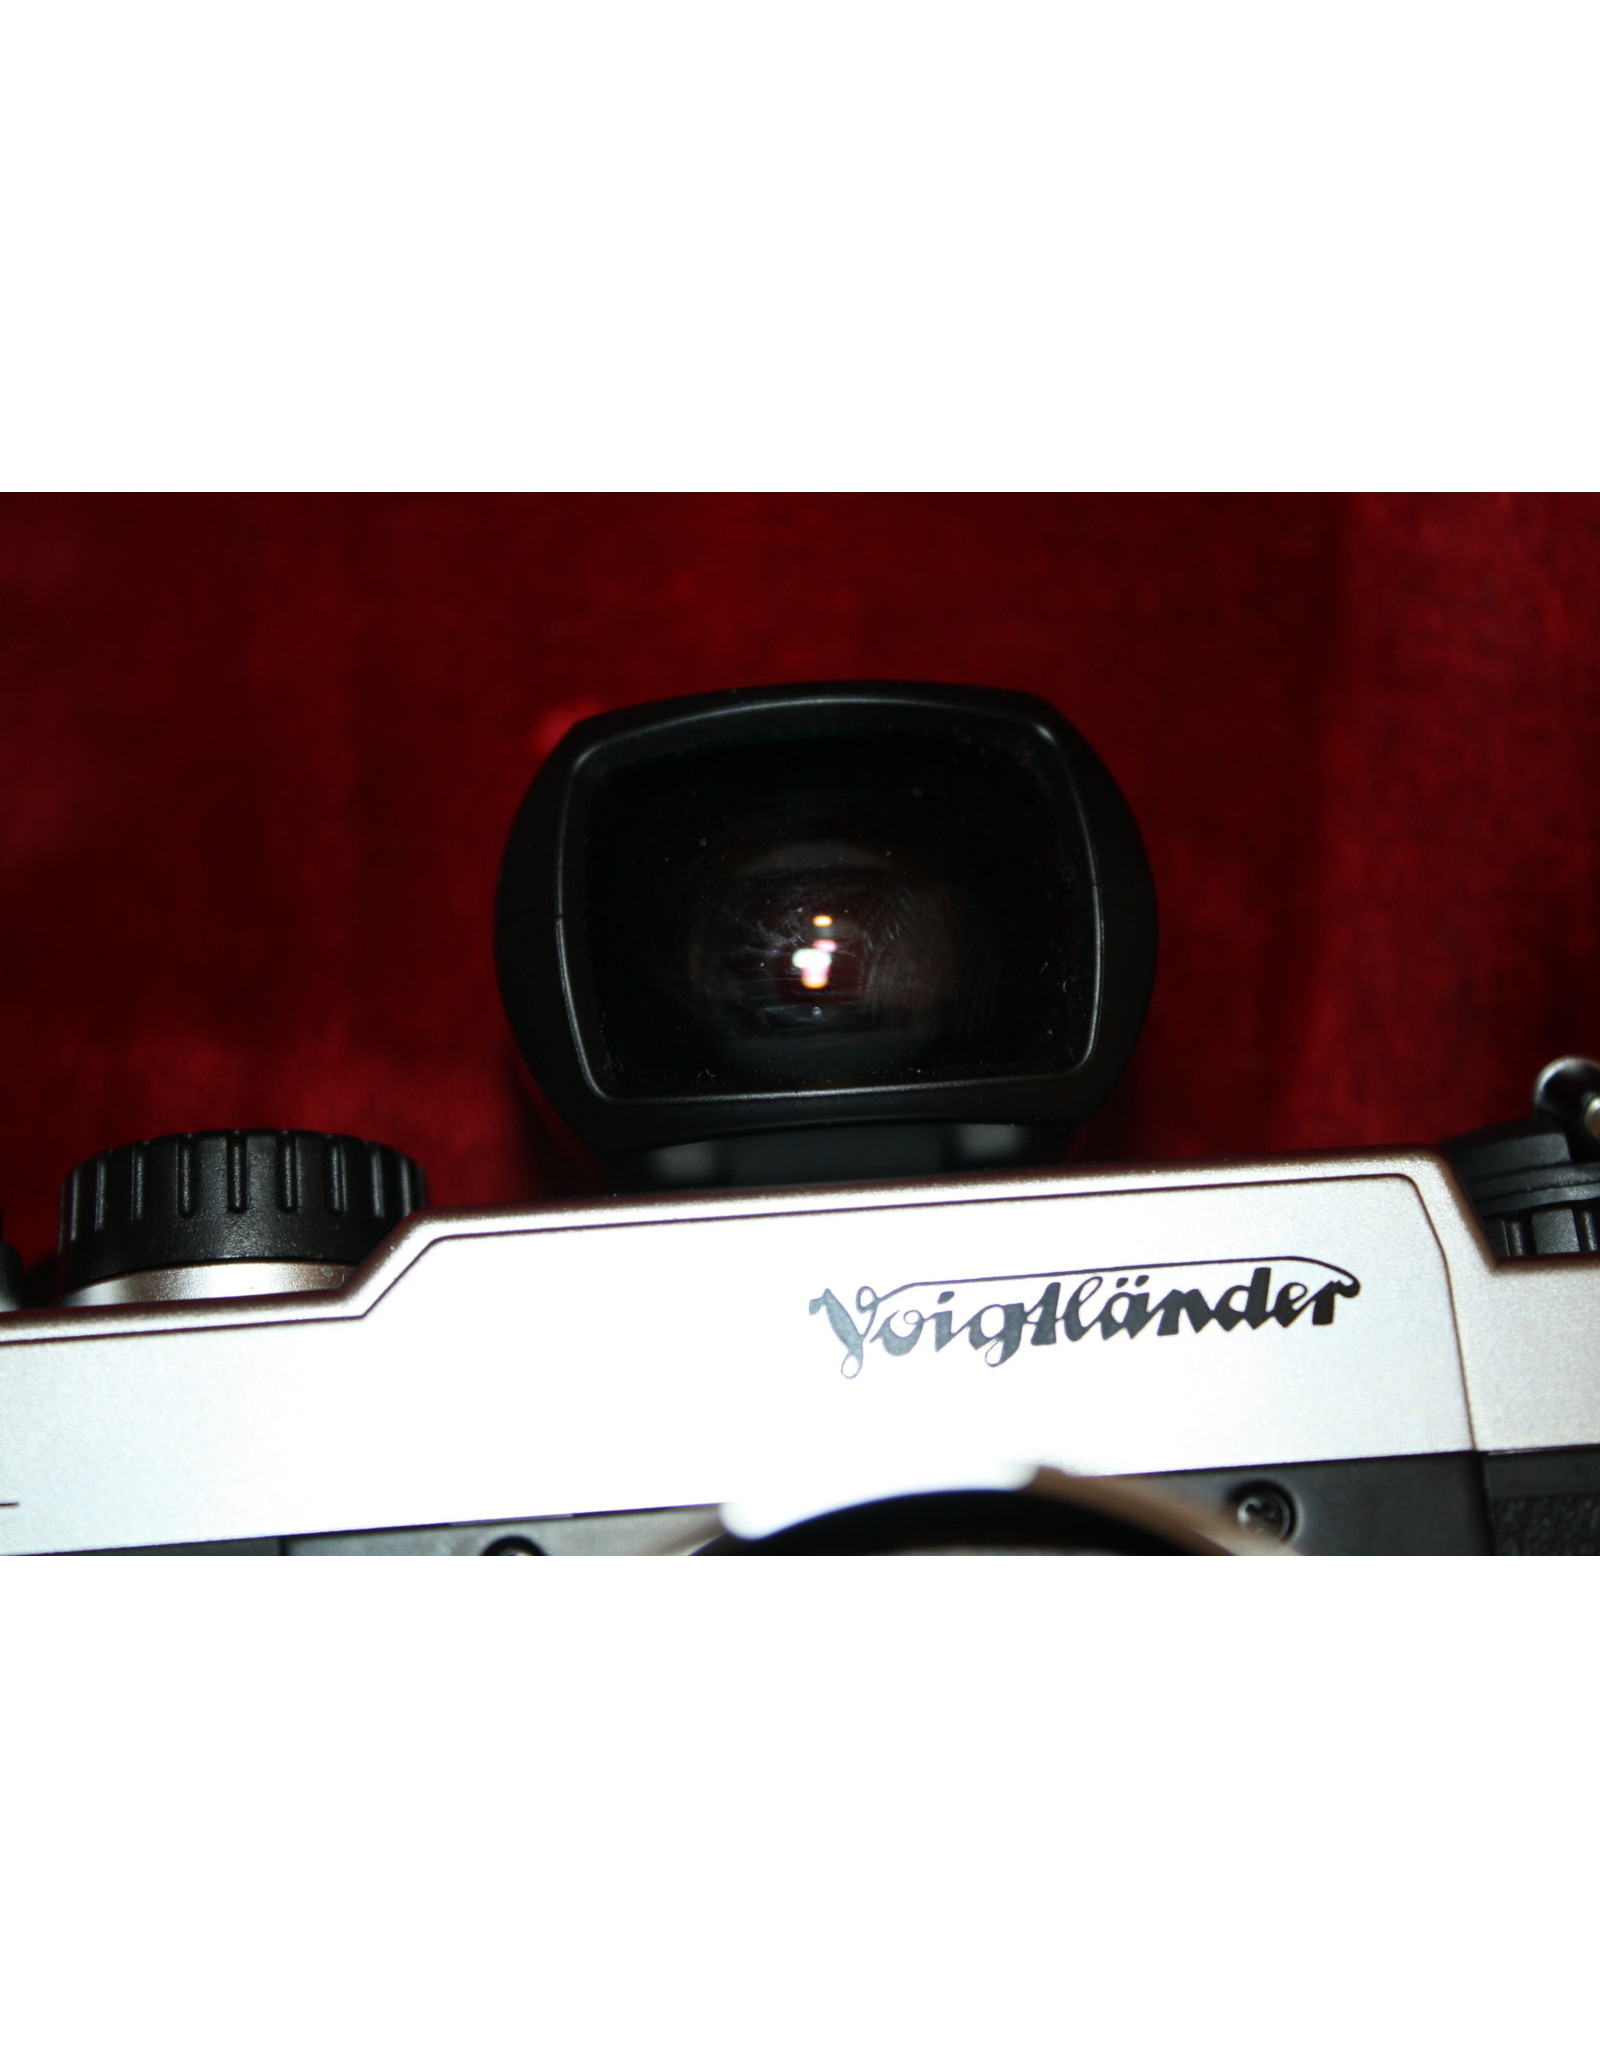 Voigtlander Bessa L + Super Wide Heliar 15mm F4.5 Lens From JAPAN[Near MINT+++]